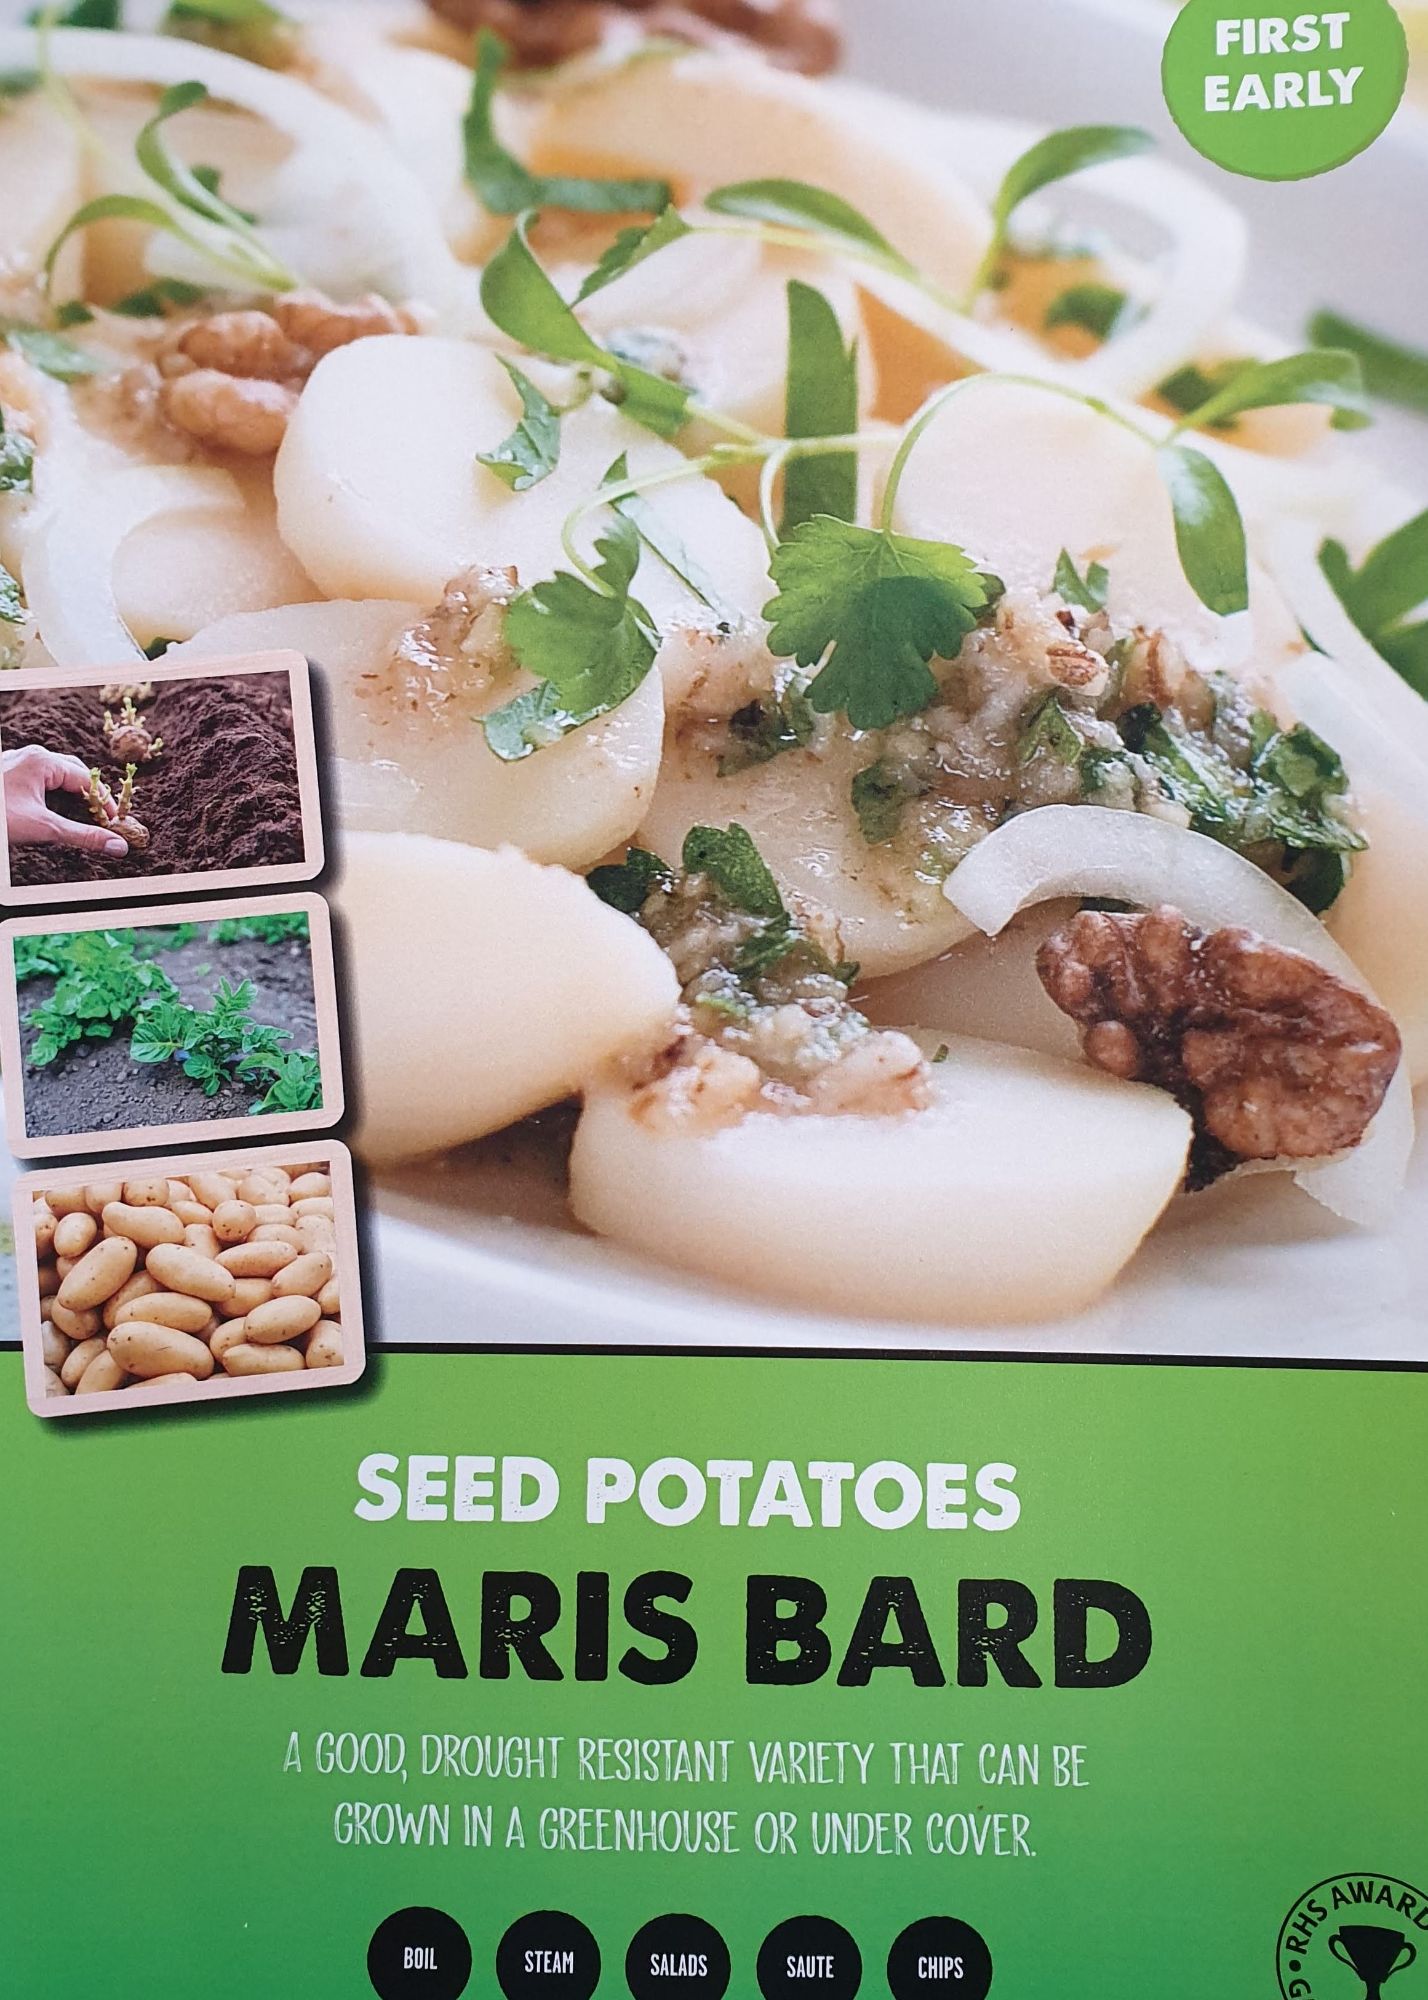 maris_bard_seed_potato_info.jpg